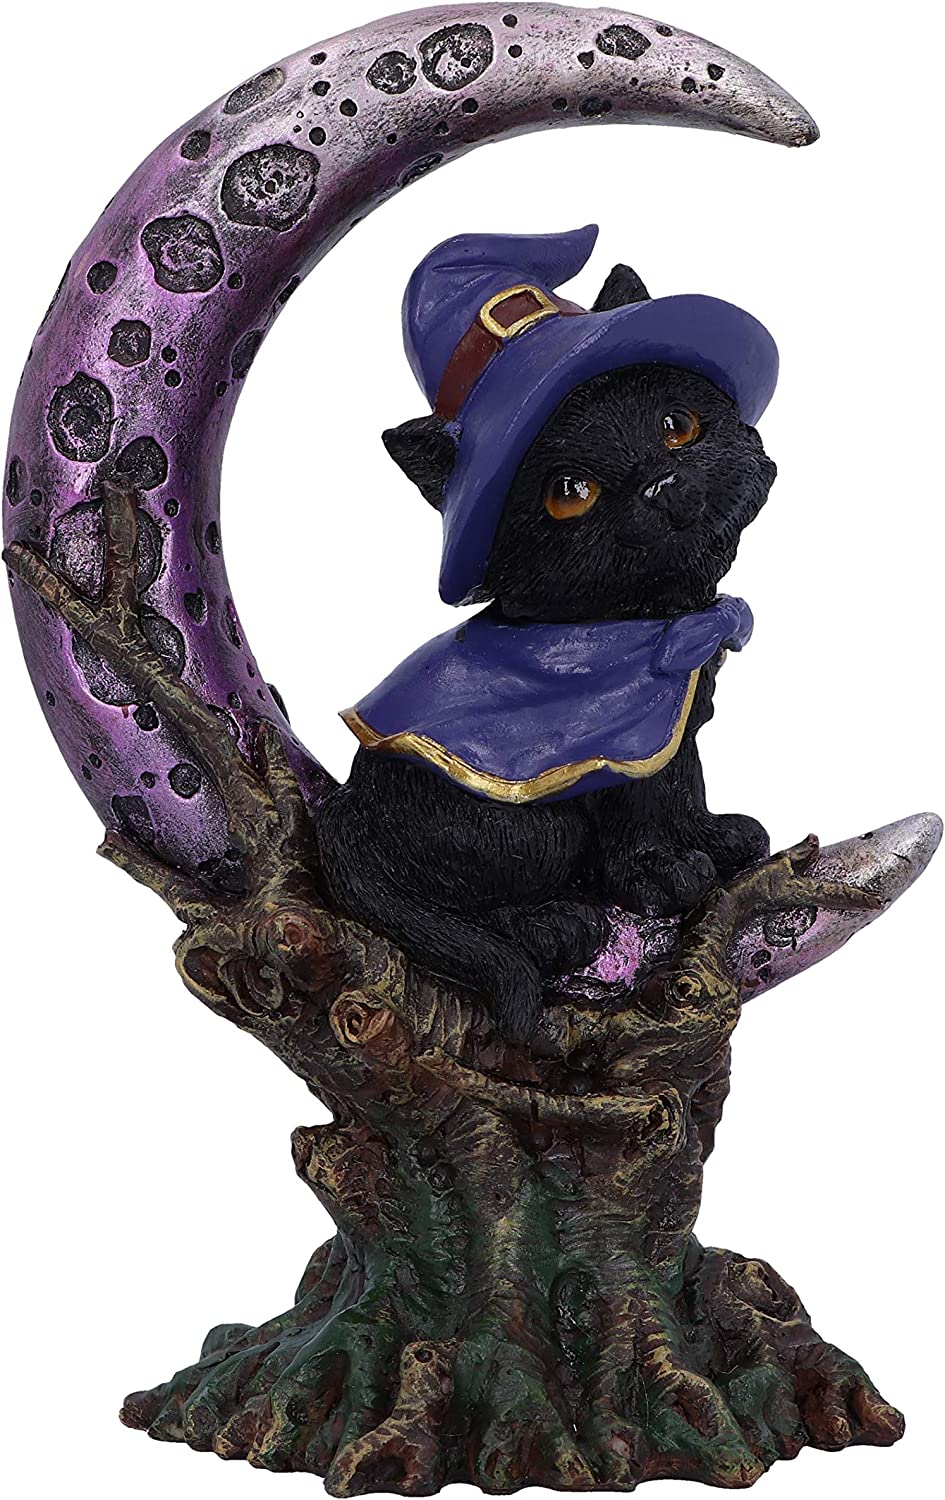 Nemesis Now Grimalkin Witches Familiar Black Cat and Crescent Moon Figurine, 18.